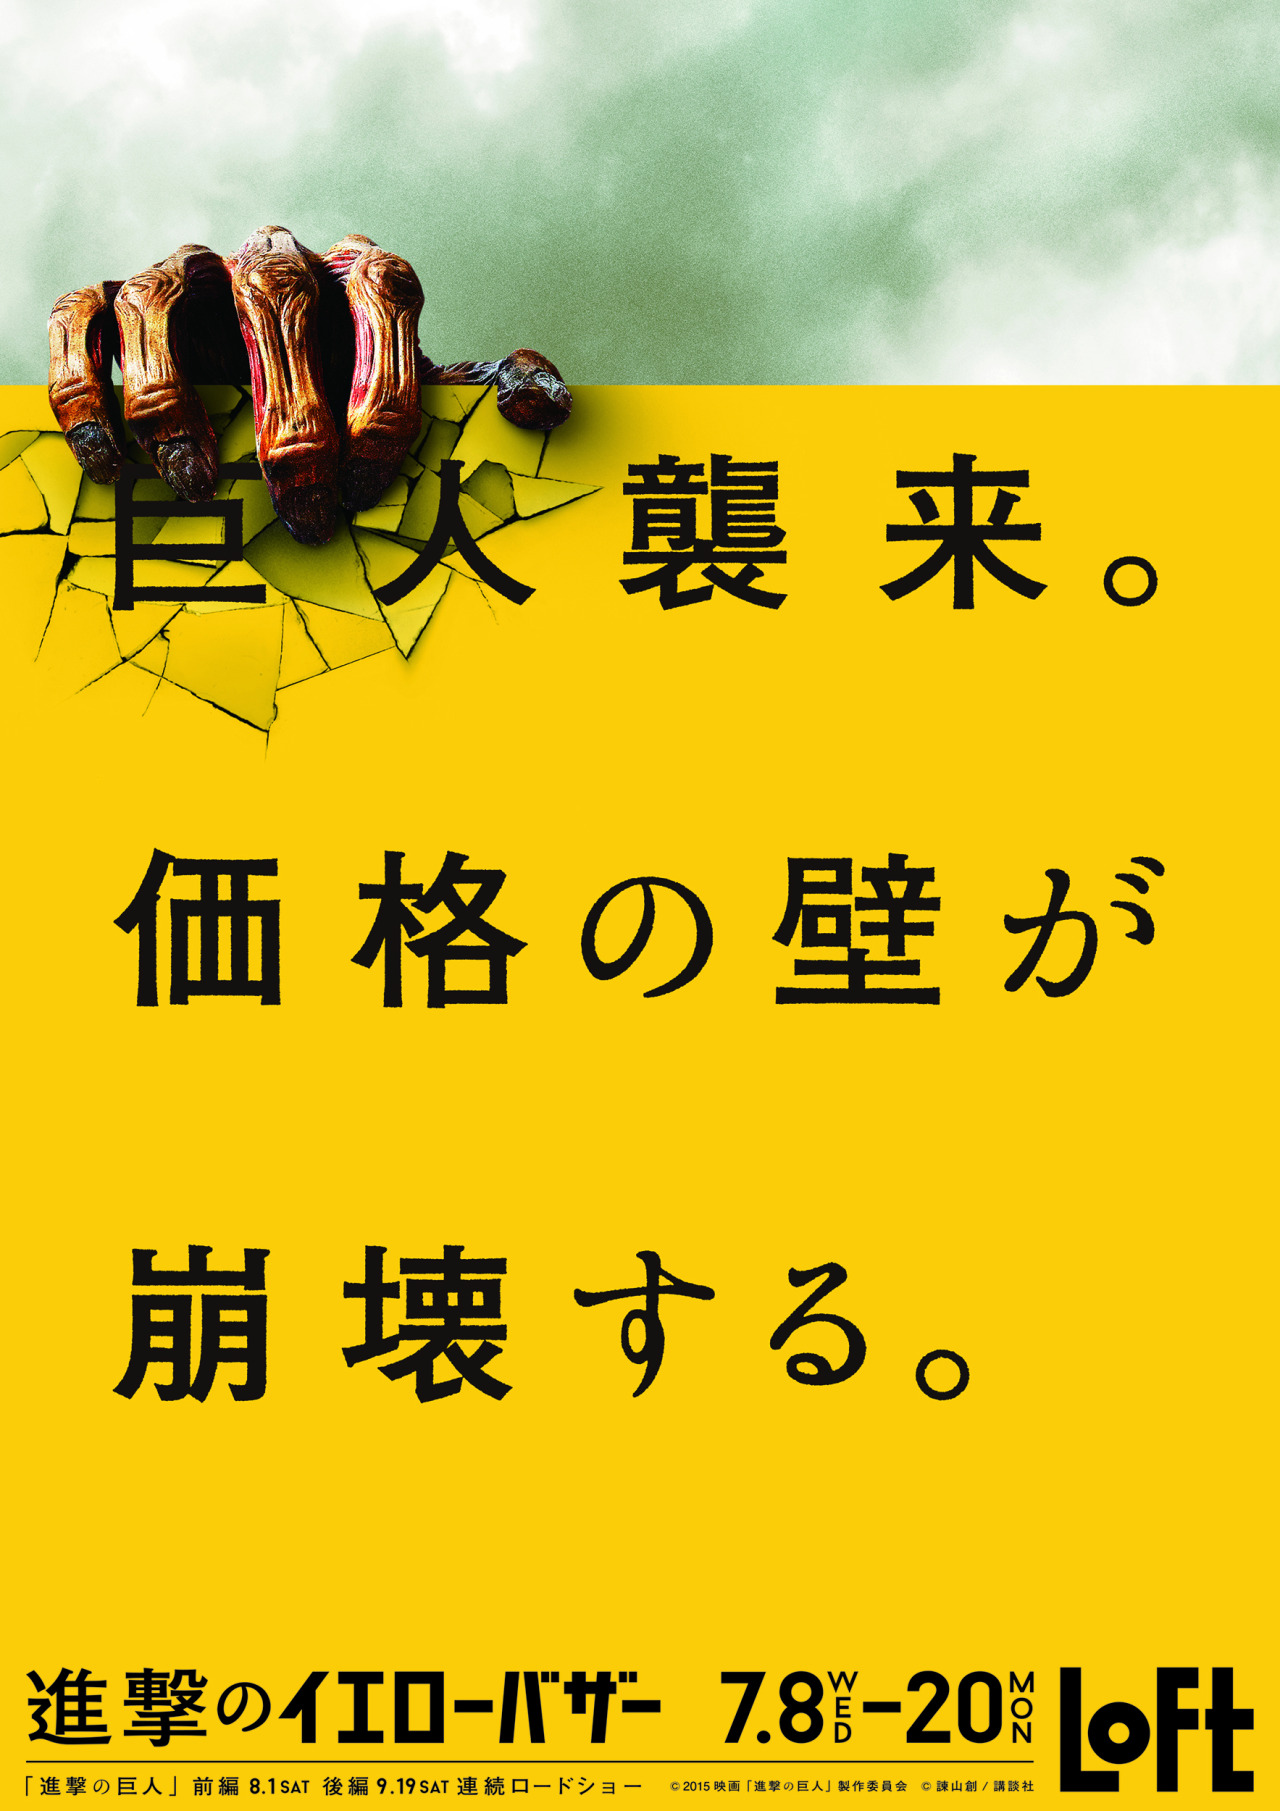 leviskinnyjeans:  Loft stores has announced a Shingeki no Kyojin Live Action Film